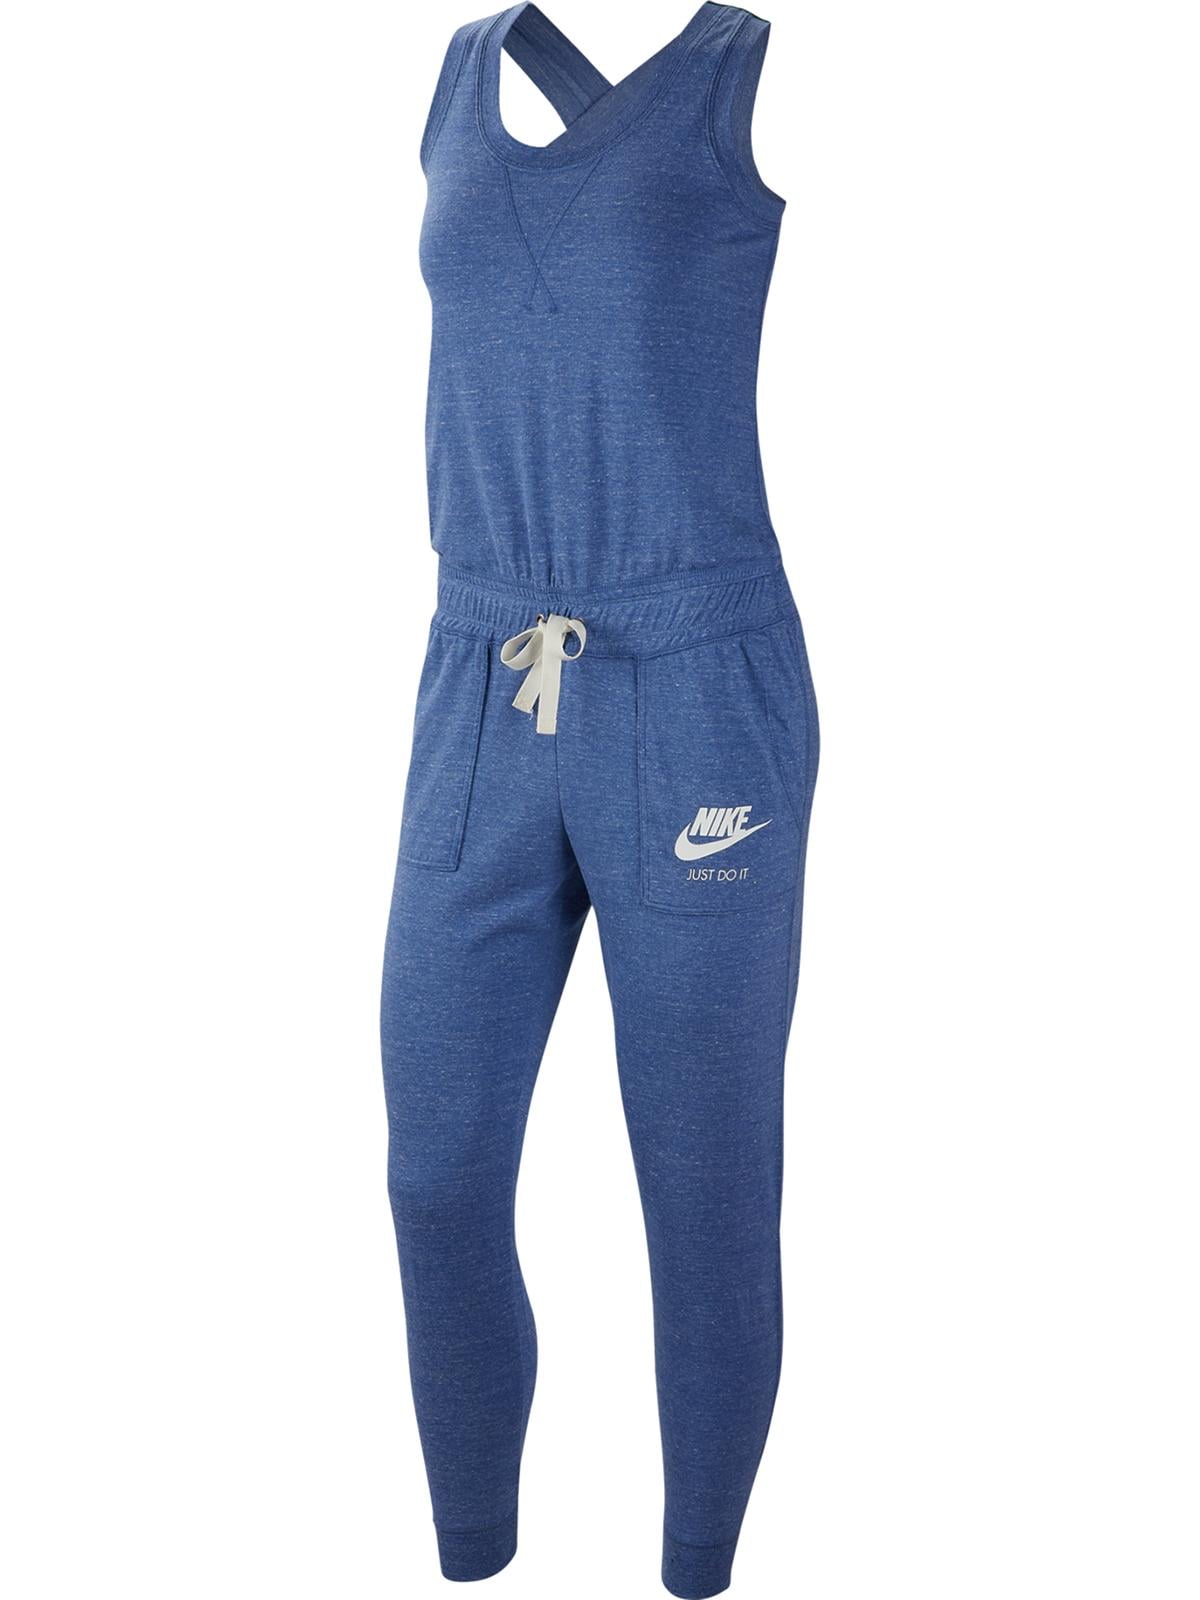 Nike Womens Fitness Yoga Jumpsuit Blue XS 